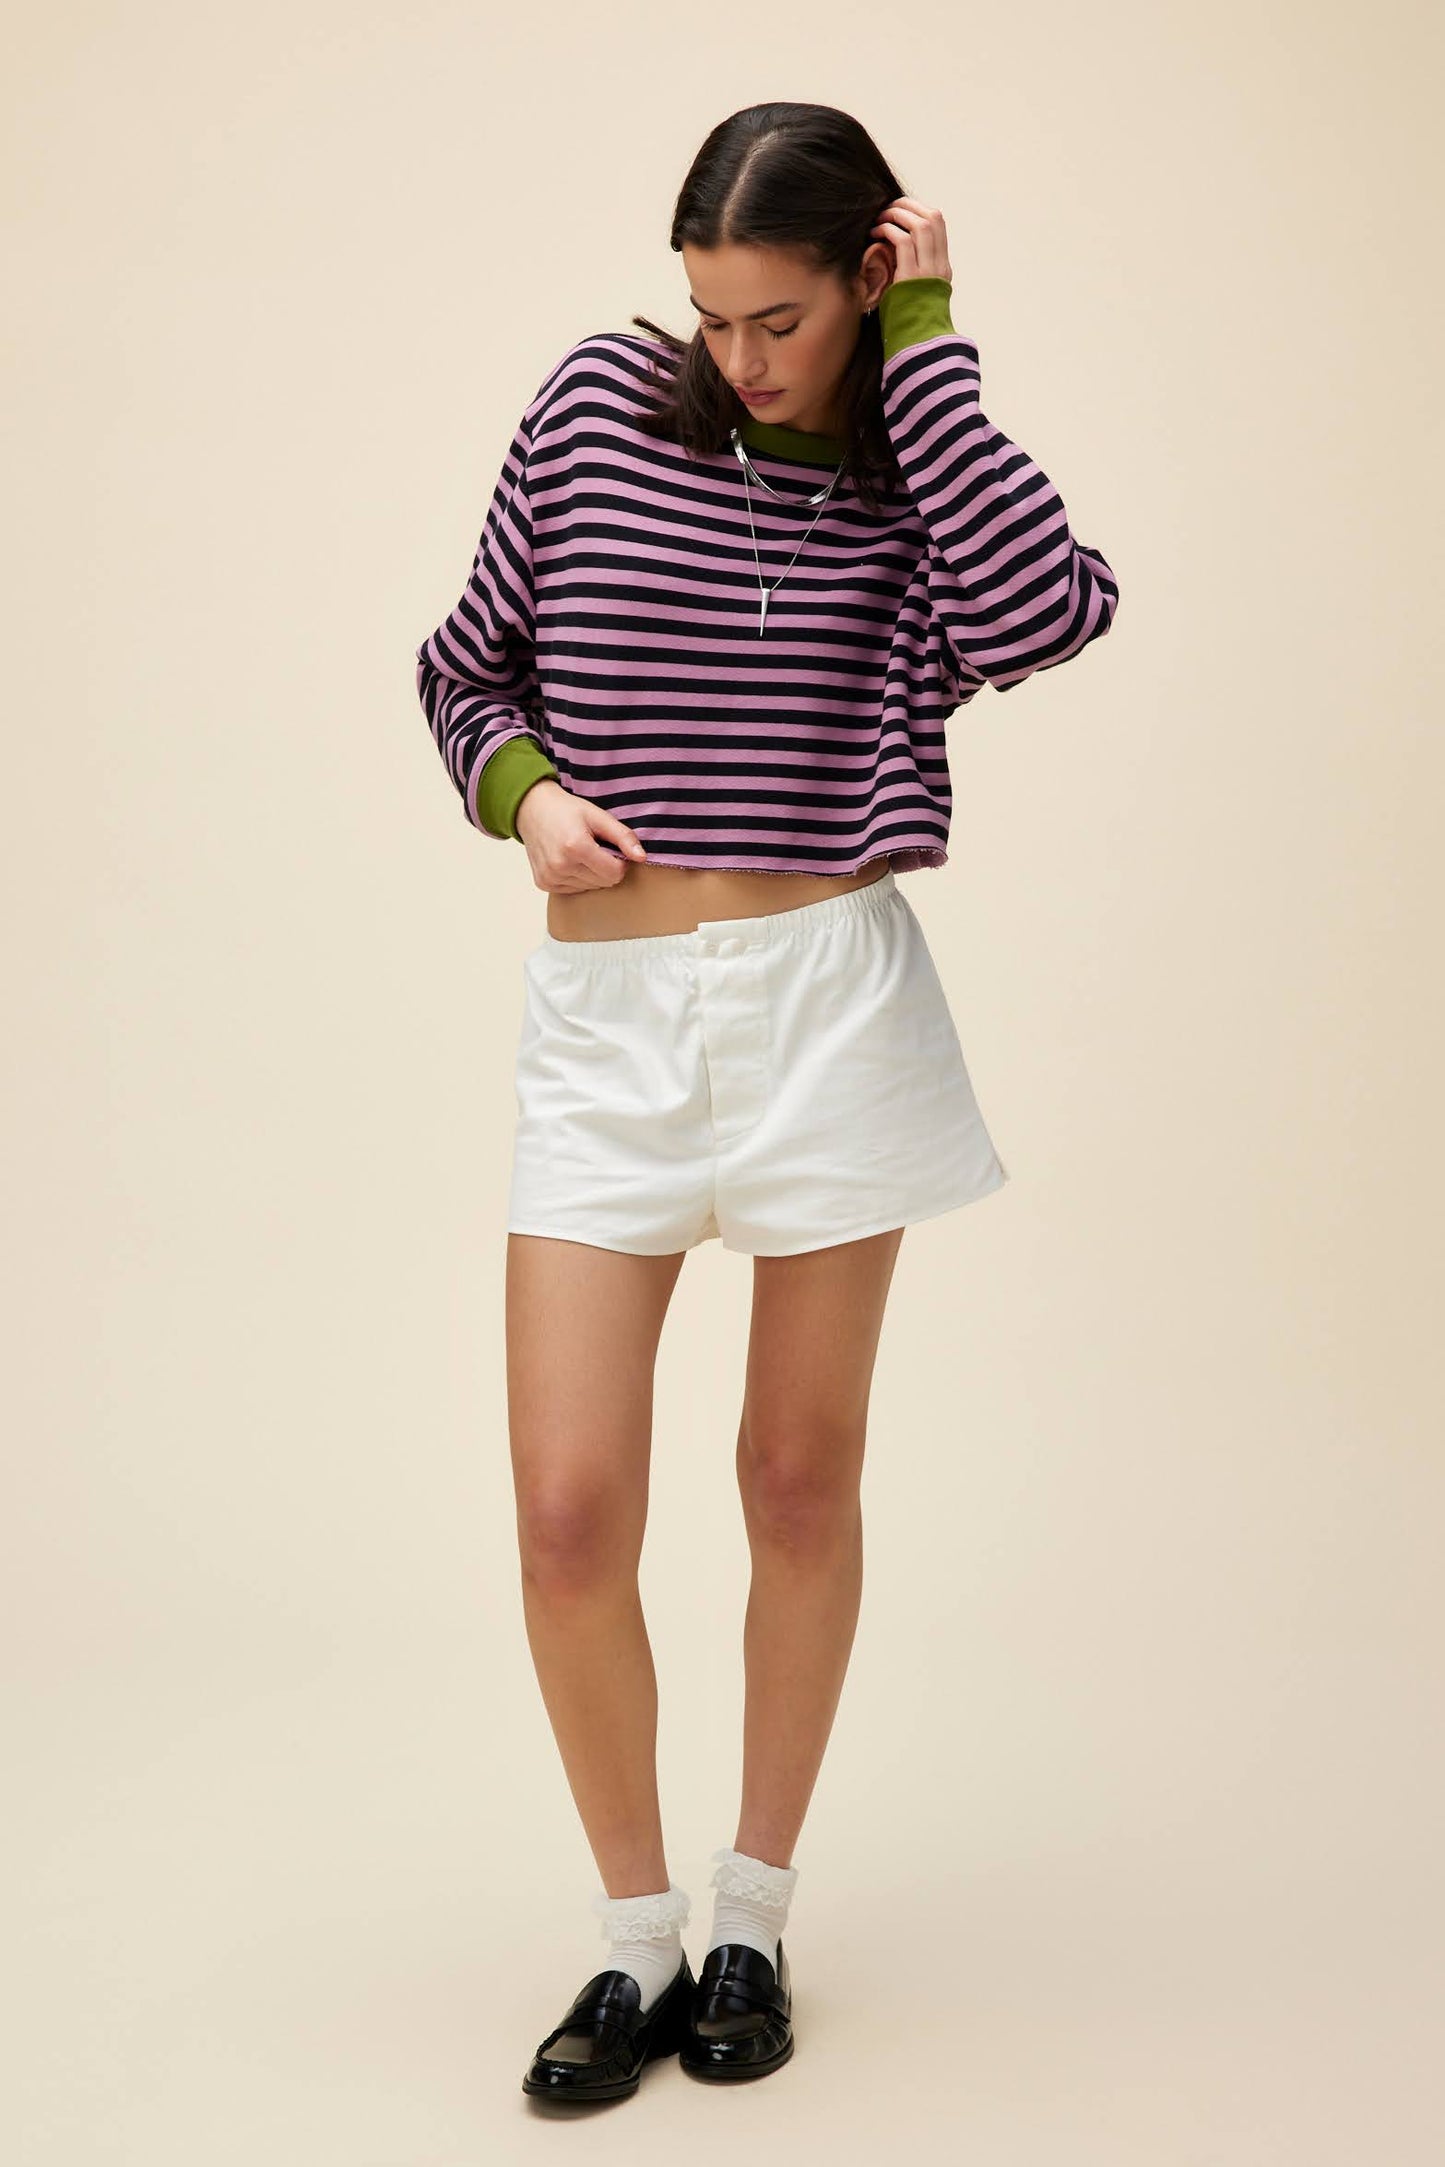 A model featuring a striped cut-off sweatshirt in lotus flower combo